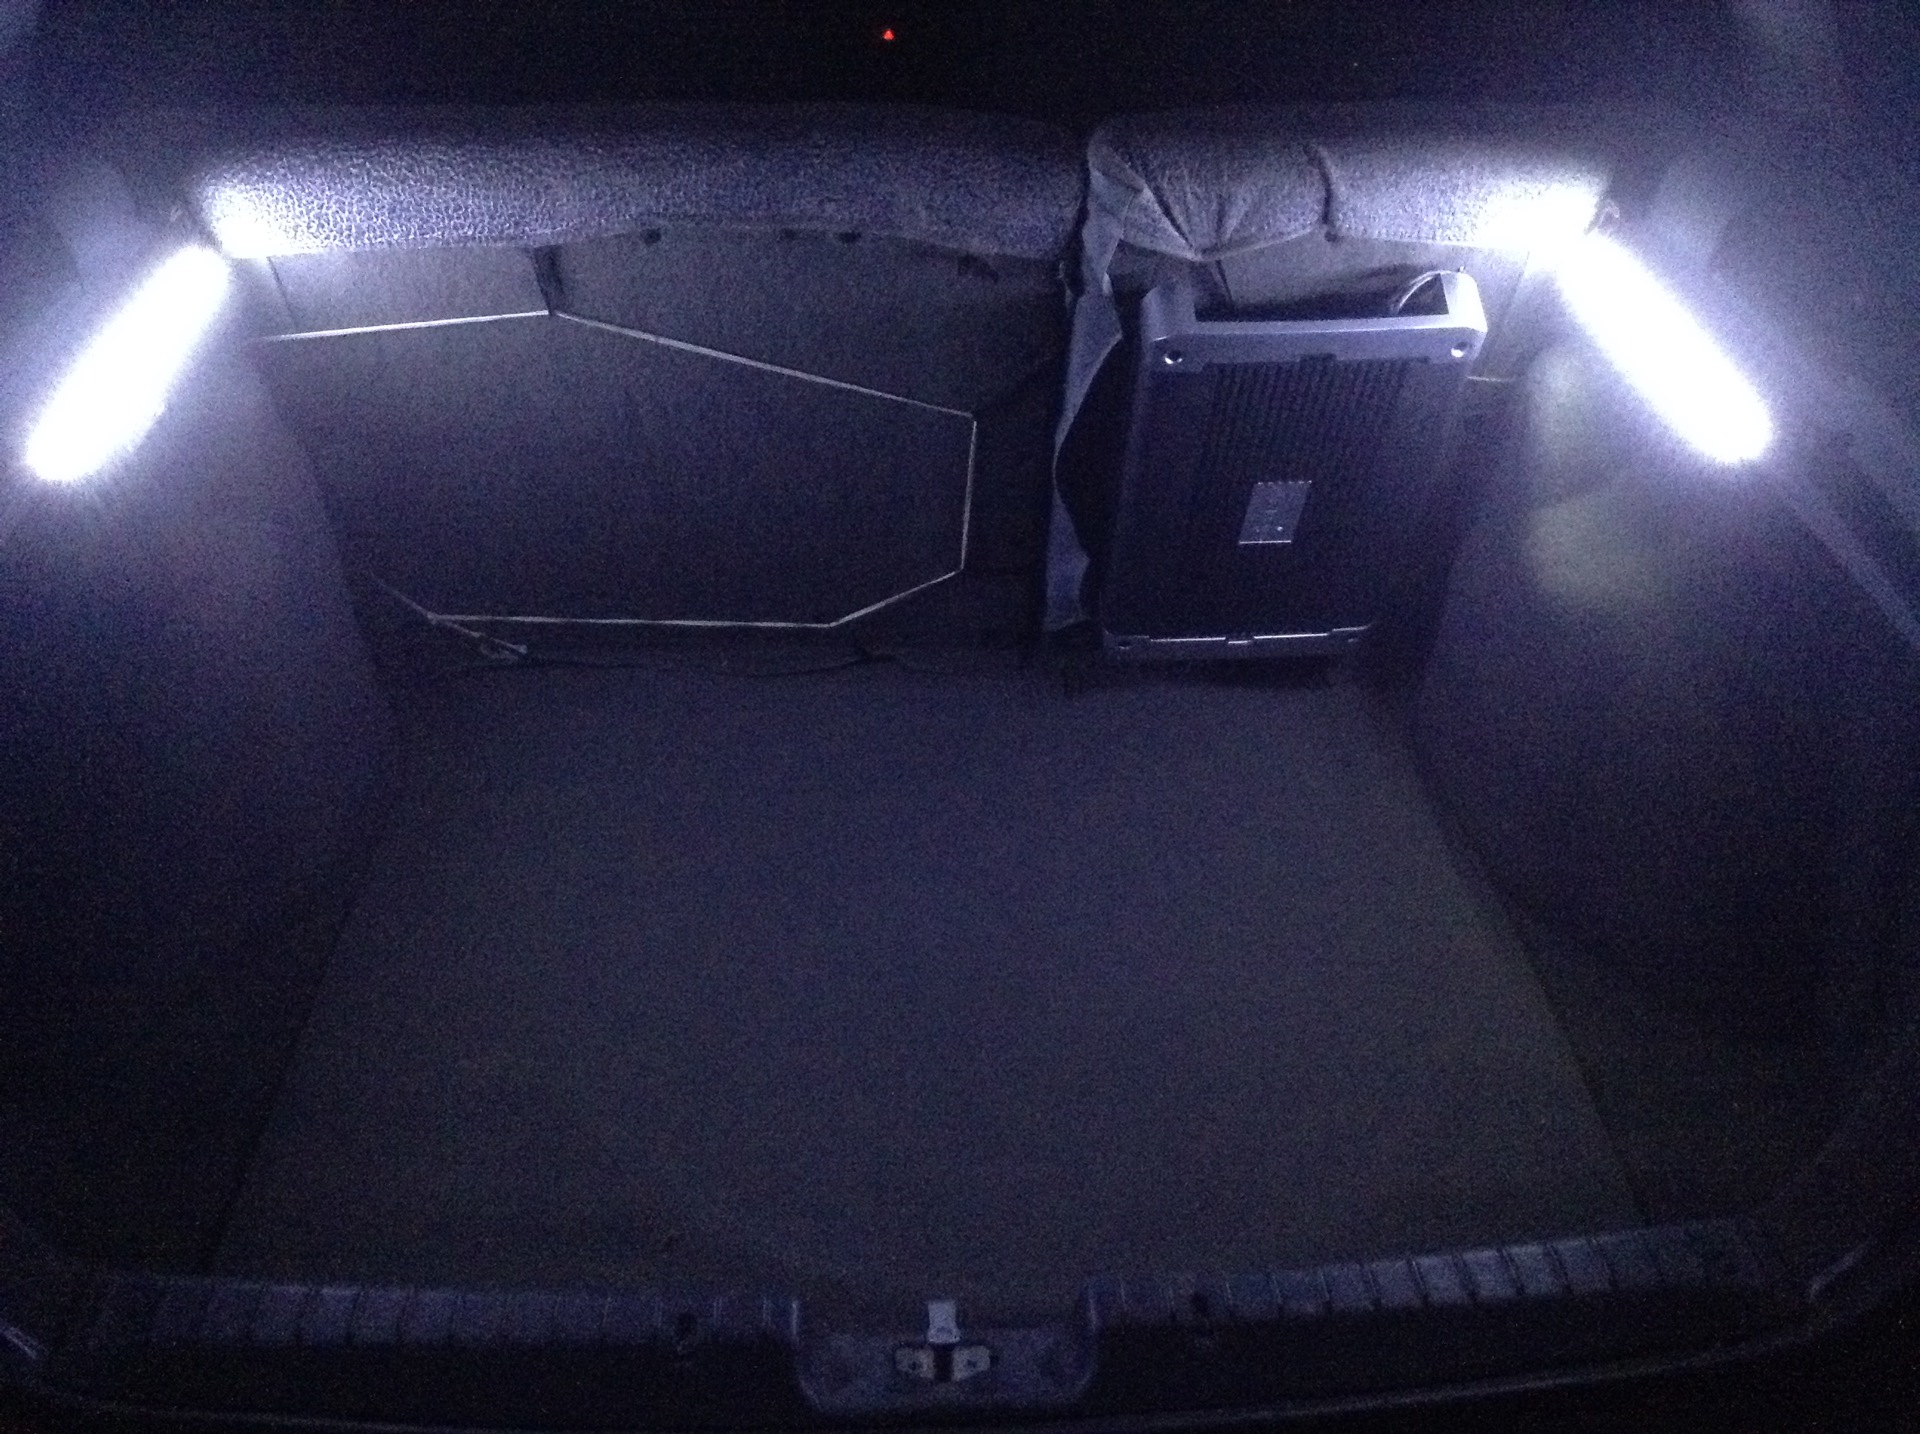 Лампа подсветки багажника Golf 4. Подсветка багажника Калина 1 универсал. Подсветка багажника ВАЗ 2106. Лампочка подсветки багажника Аккорд 6. Подсветка багажника нива